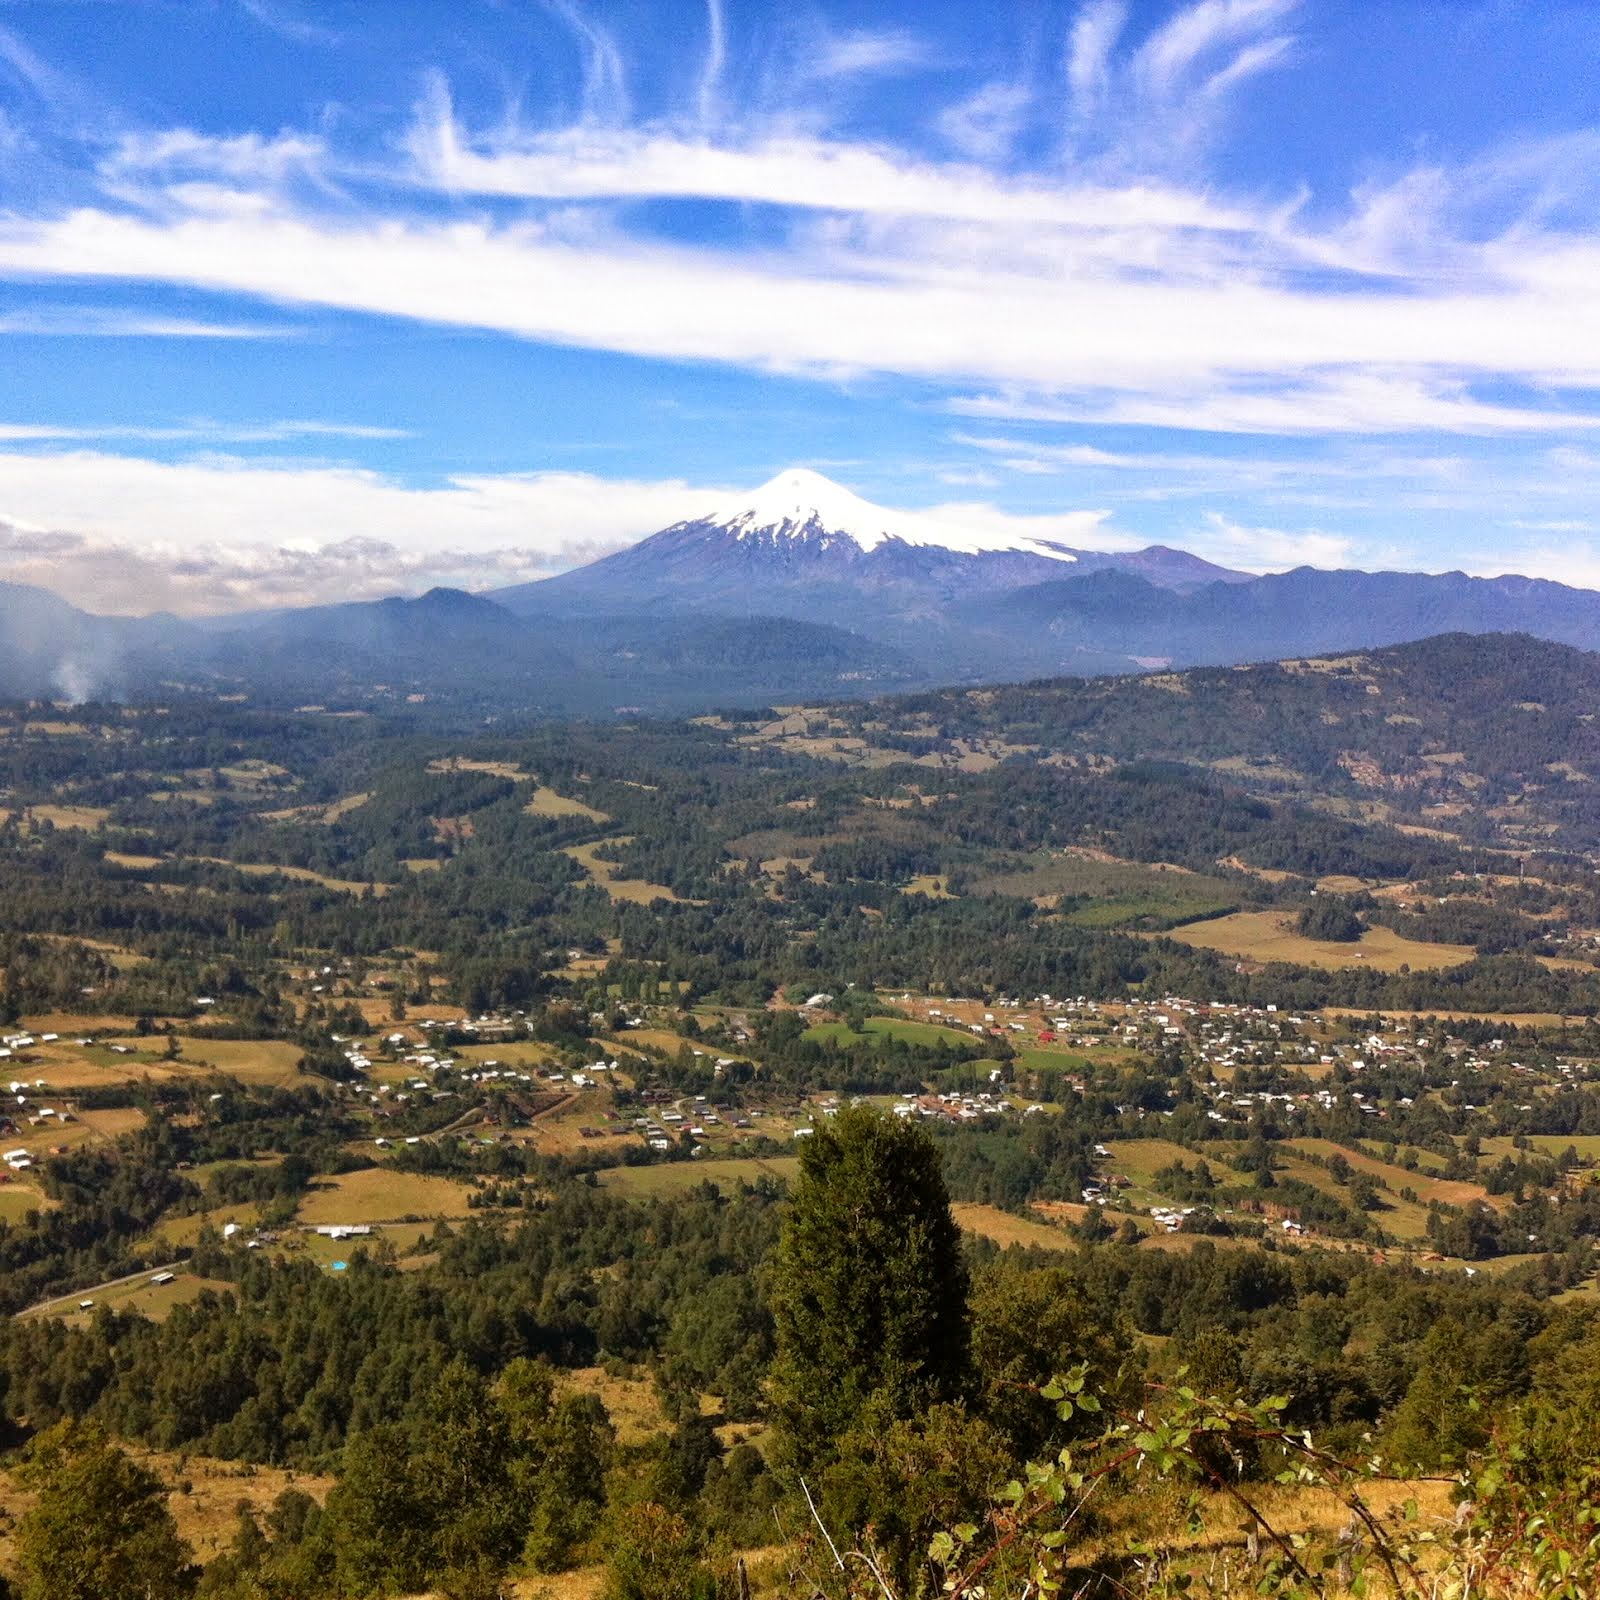 Xplora "Trekking P.N. Villarrica"